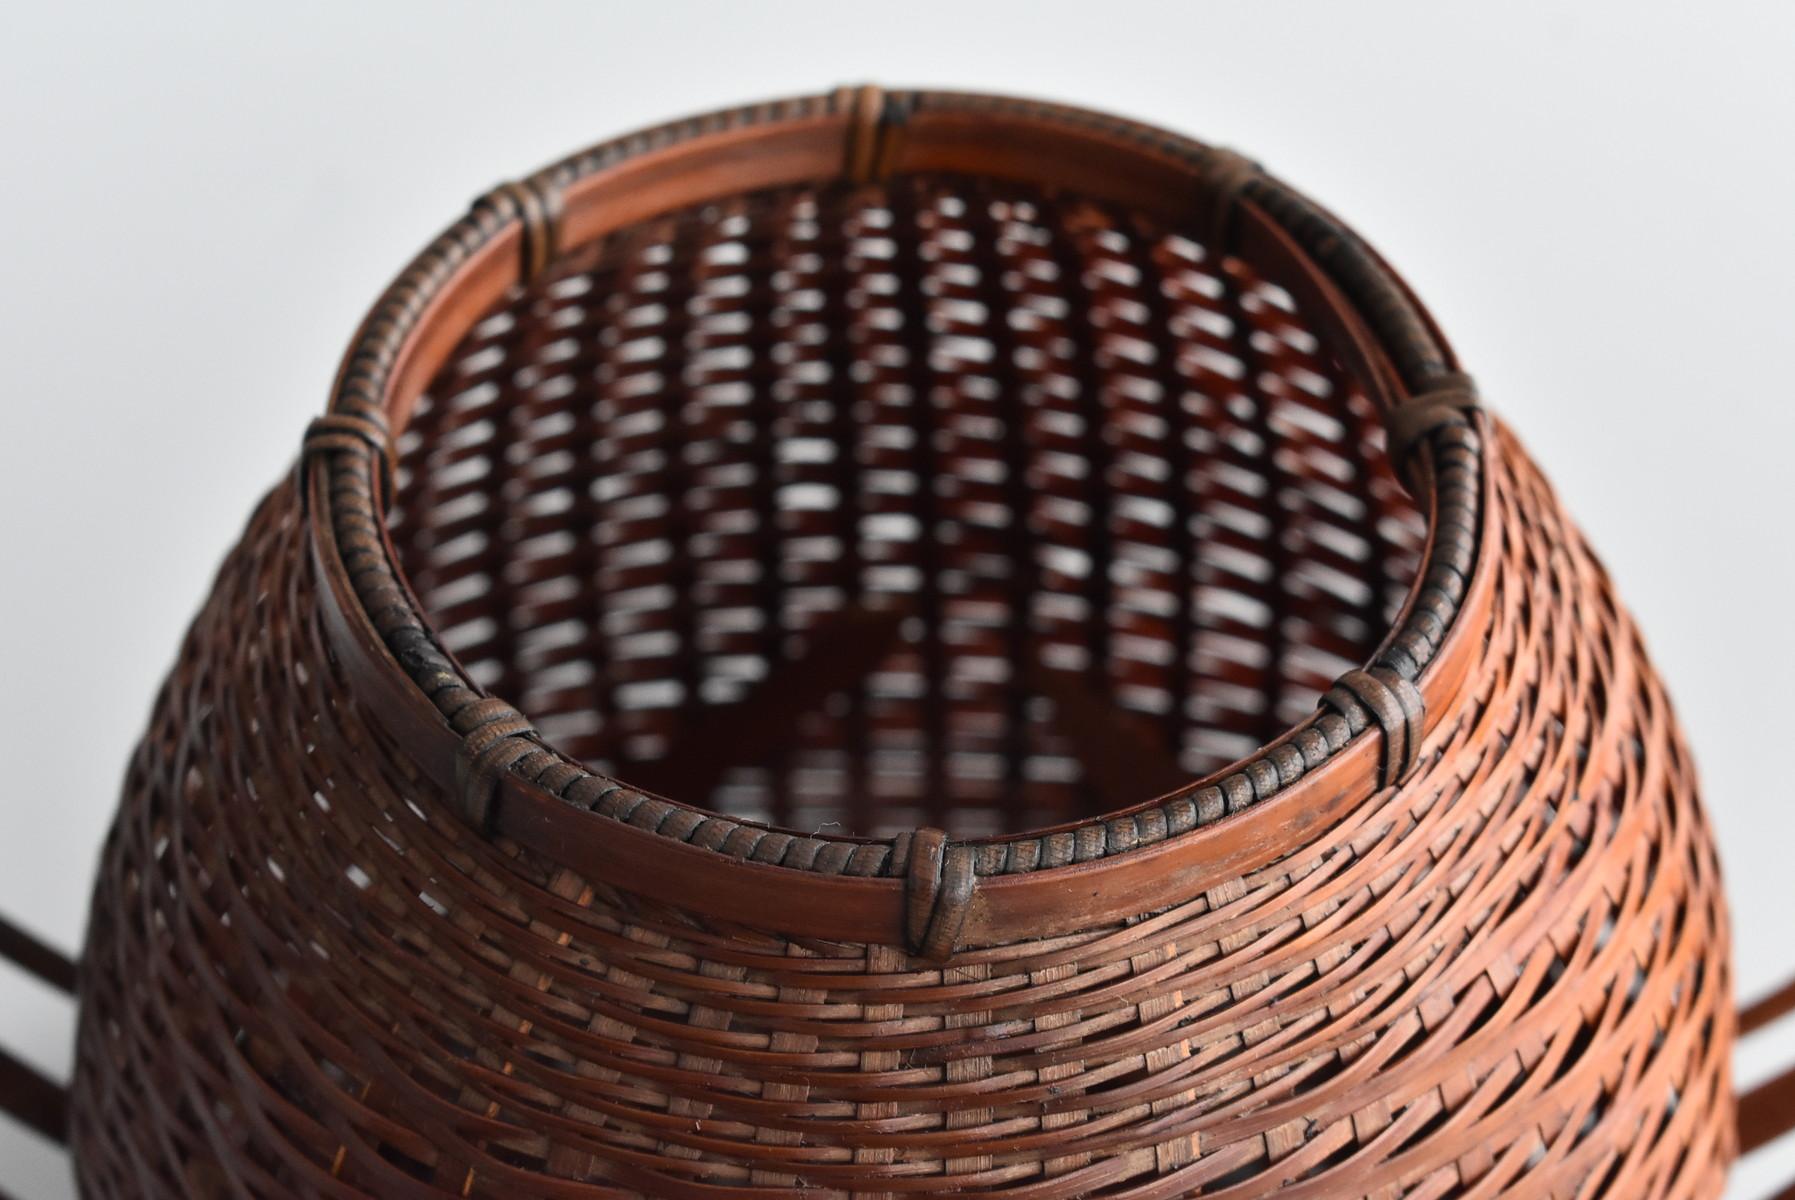 Showa Period in Japan, Small Bamboo Basket / Old Antique Flower Basket /Folk Art 3